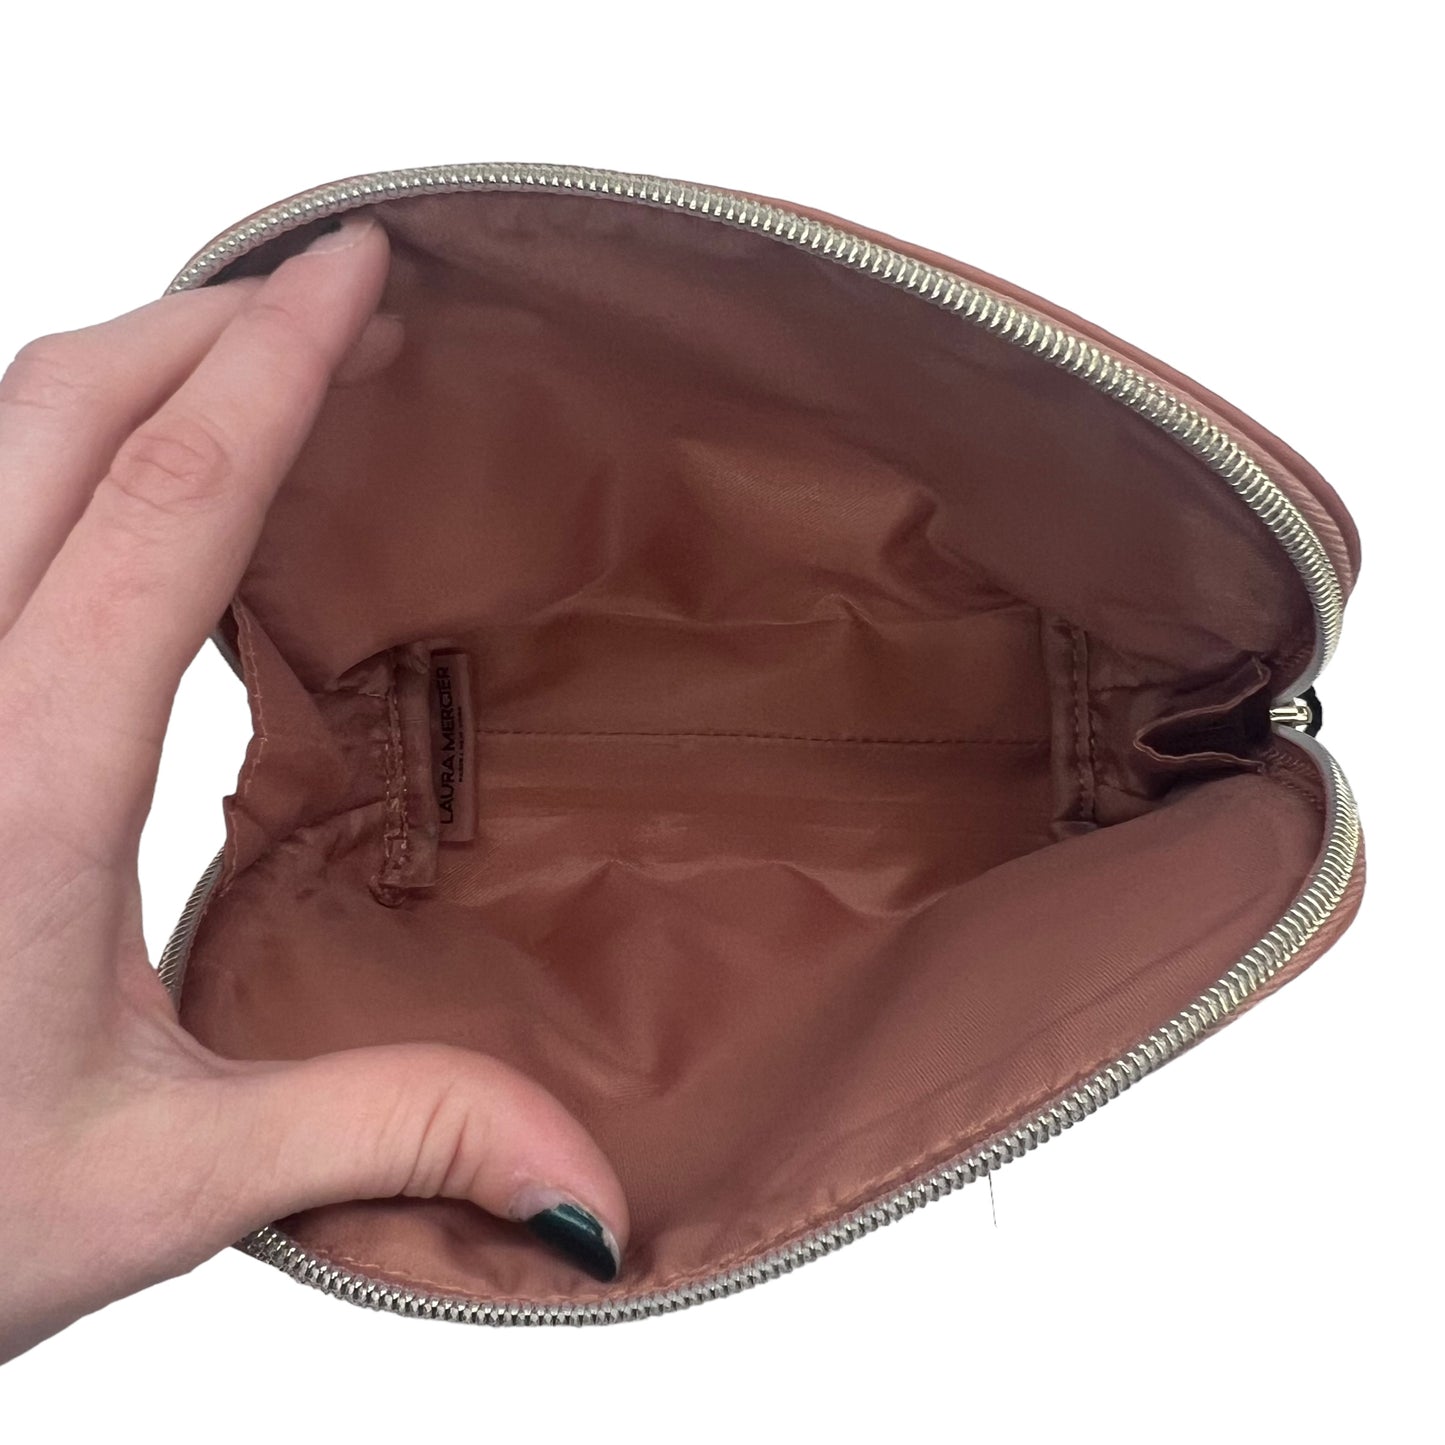 Makeup Bag By Clothes Mentor  Size: Medium